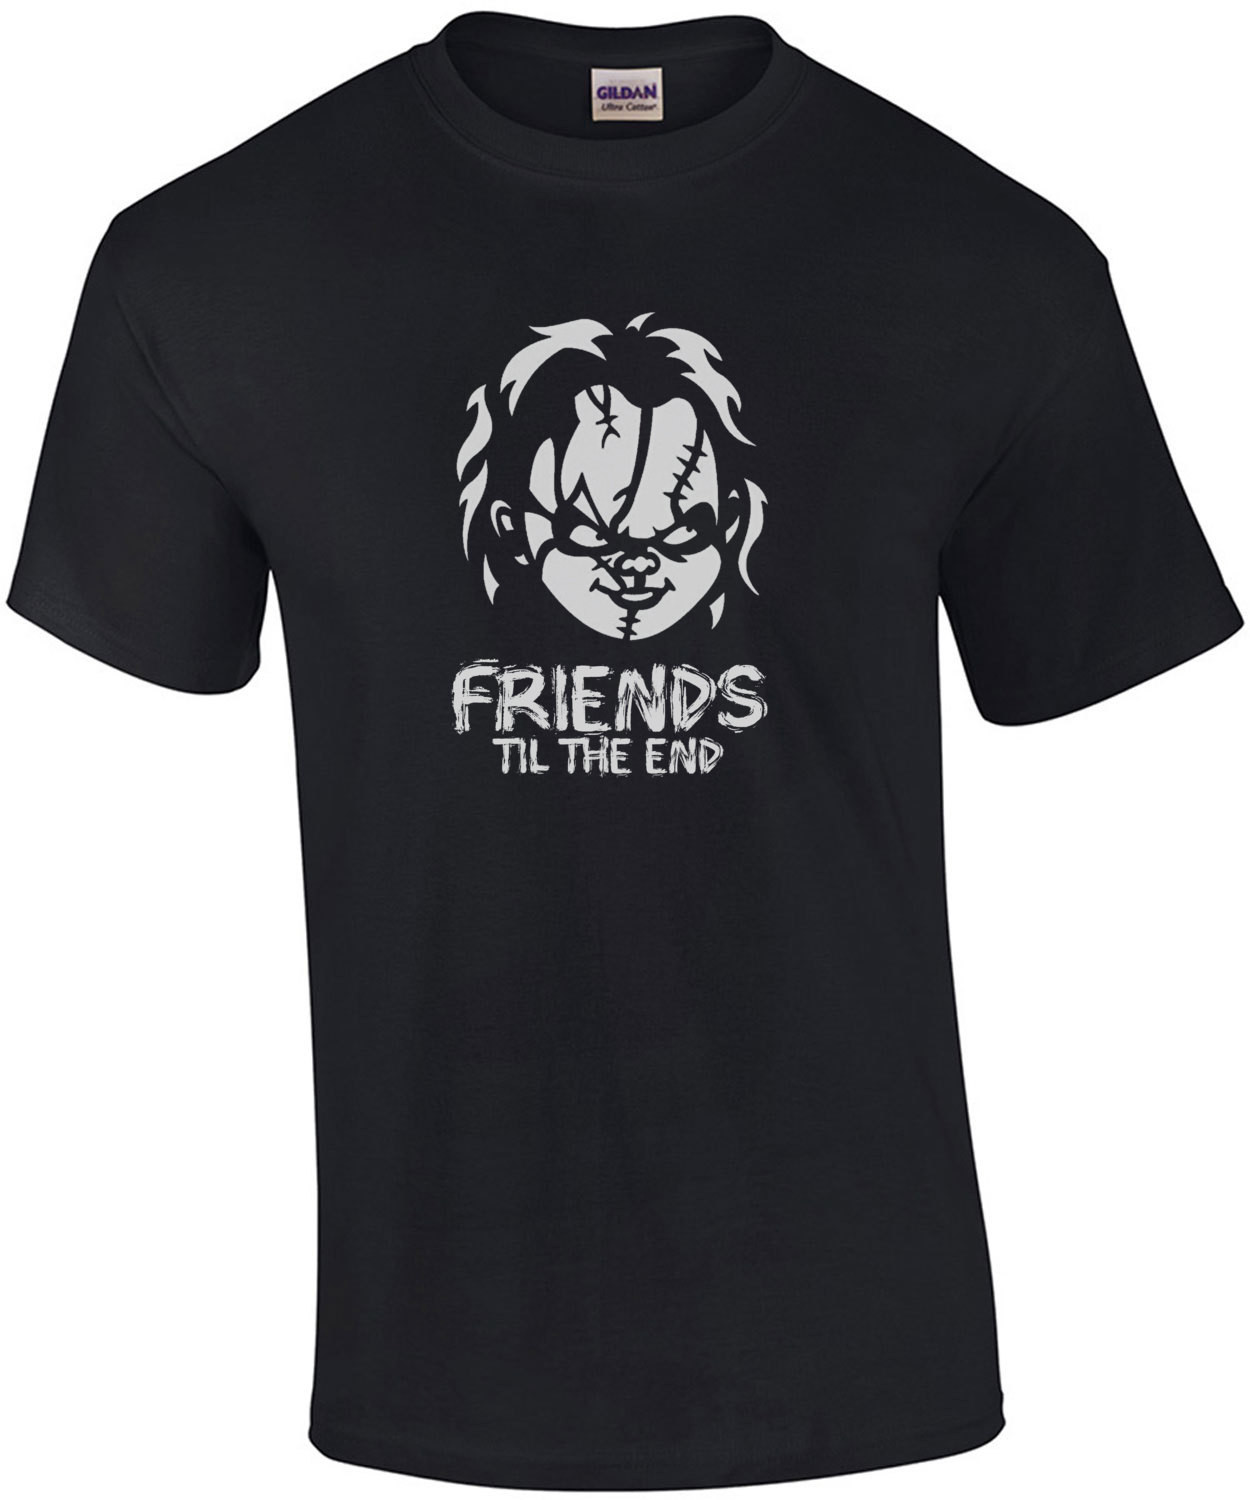 Chucky - Friends til the end - Child's Play Chucky T-Shirt